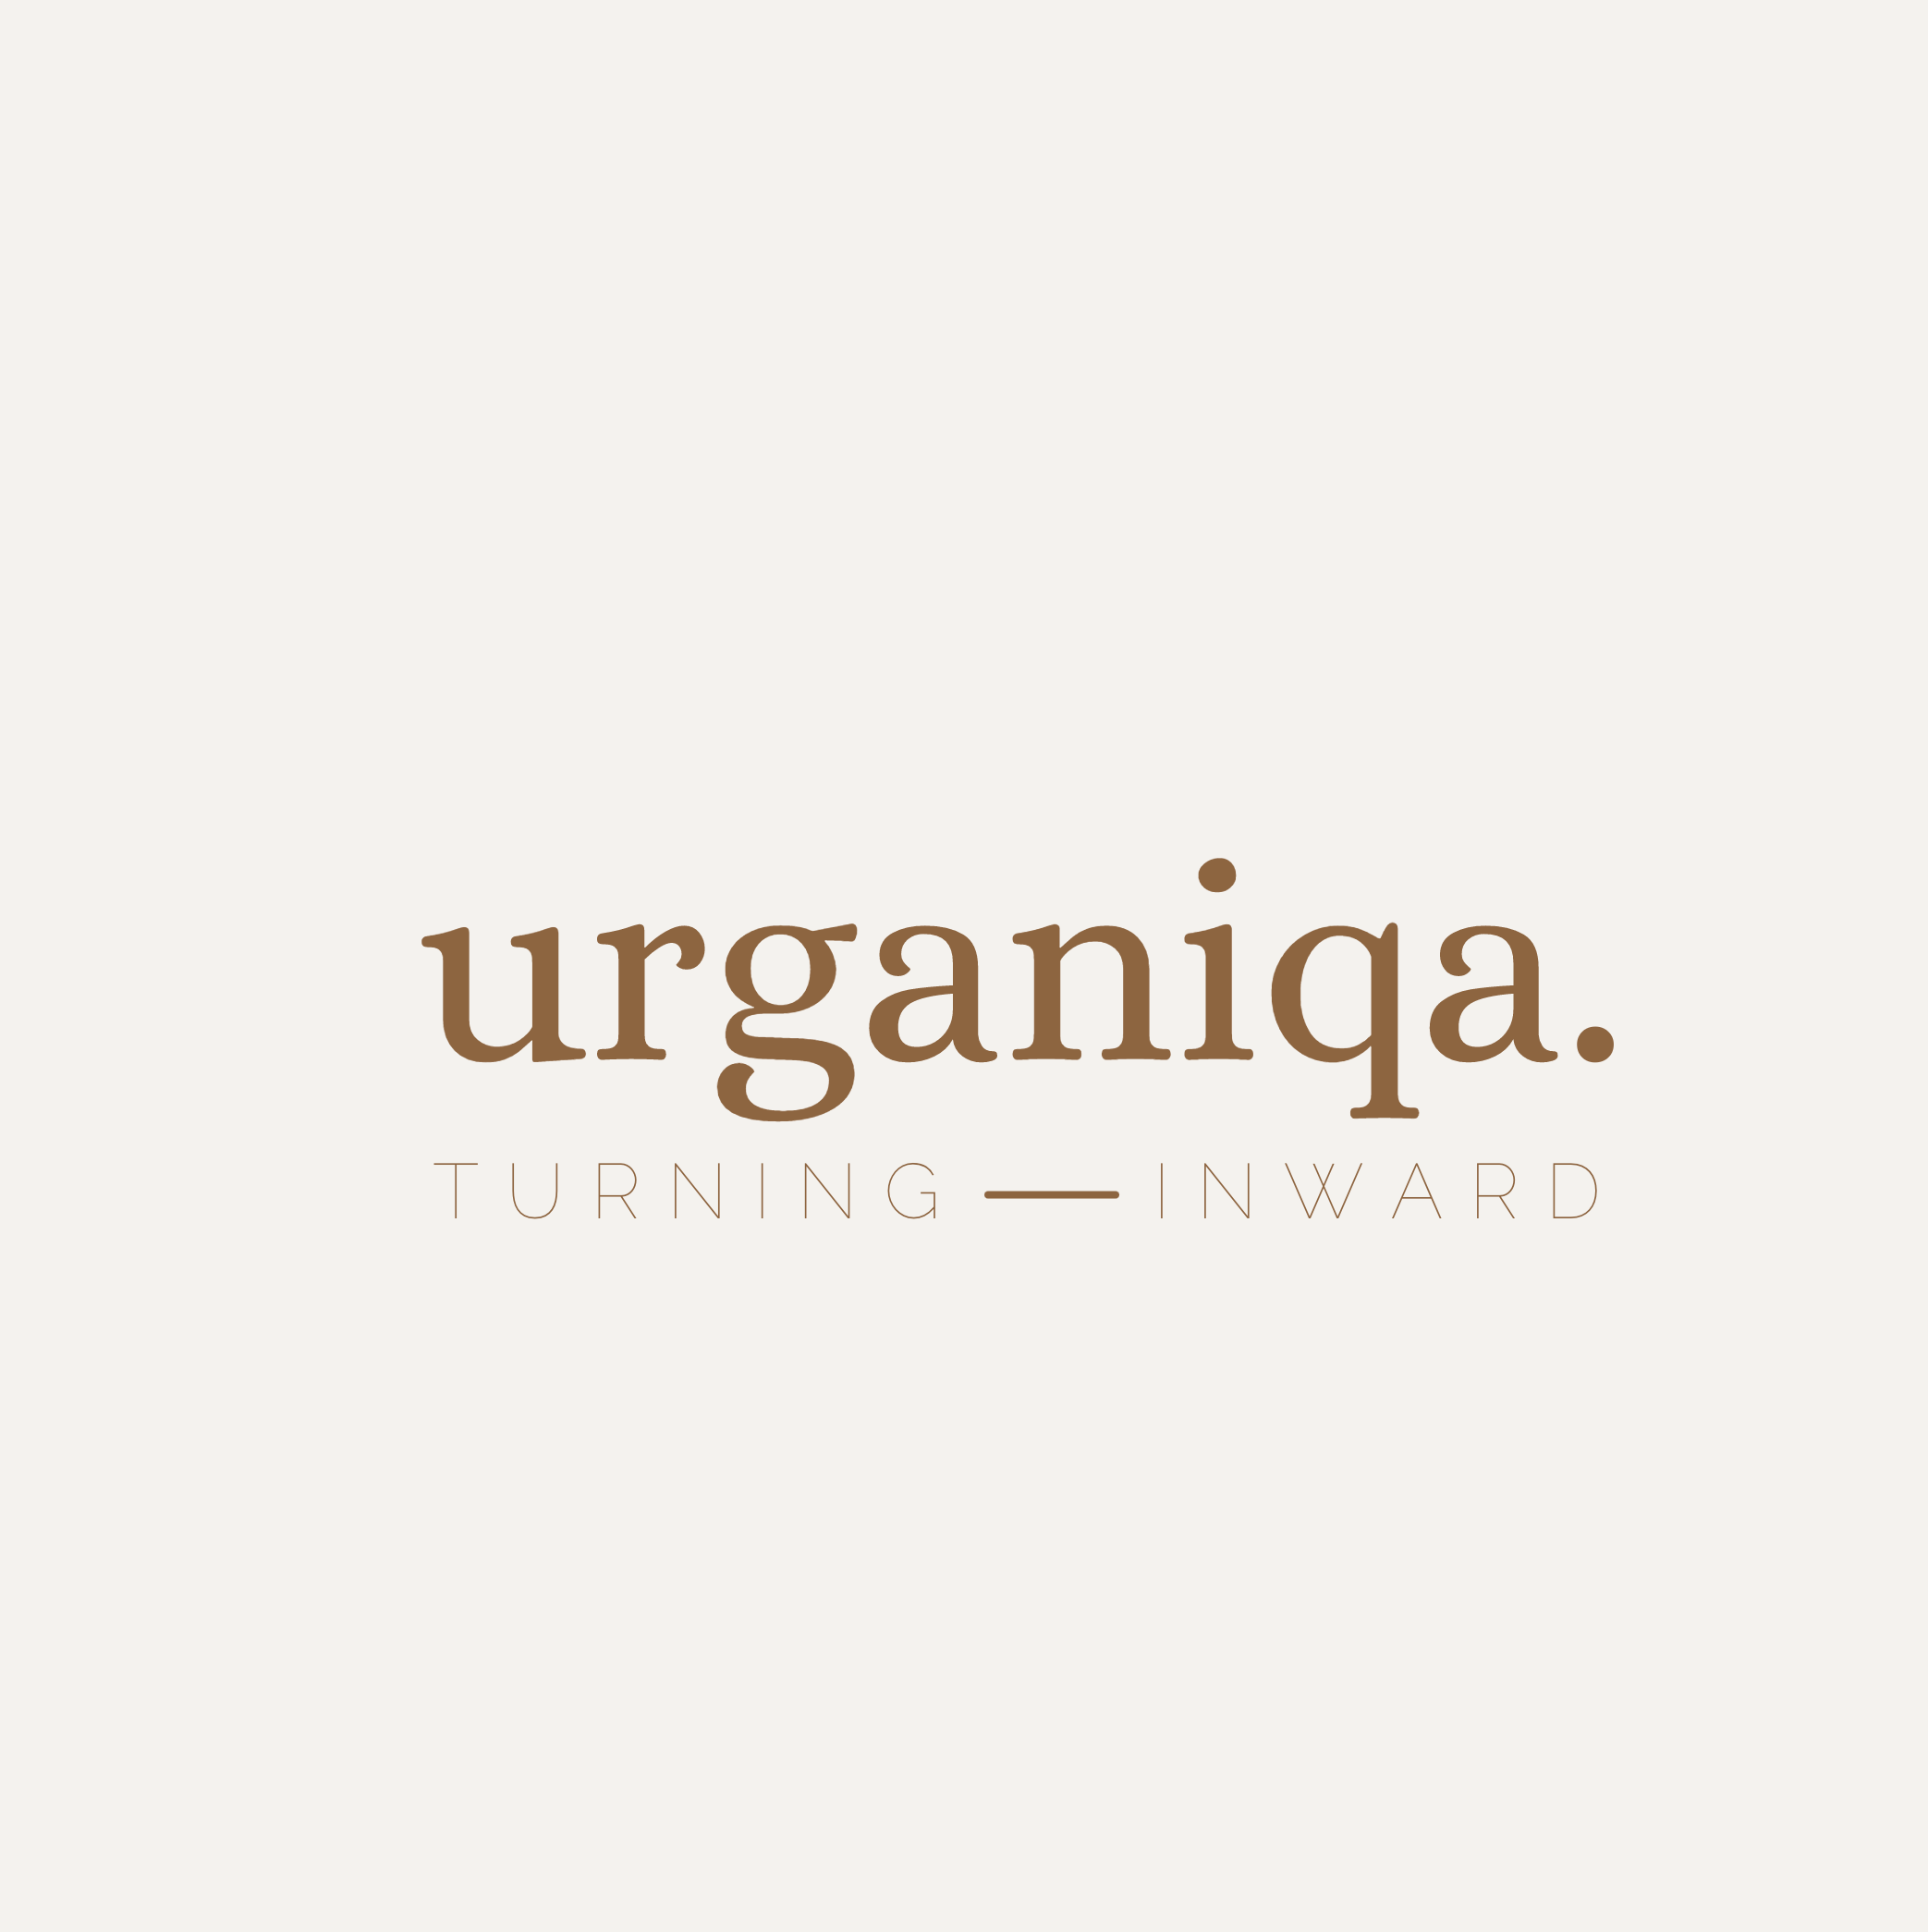 Urganiqa business logo - text says turning inward 